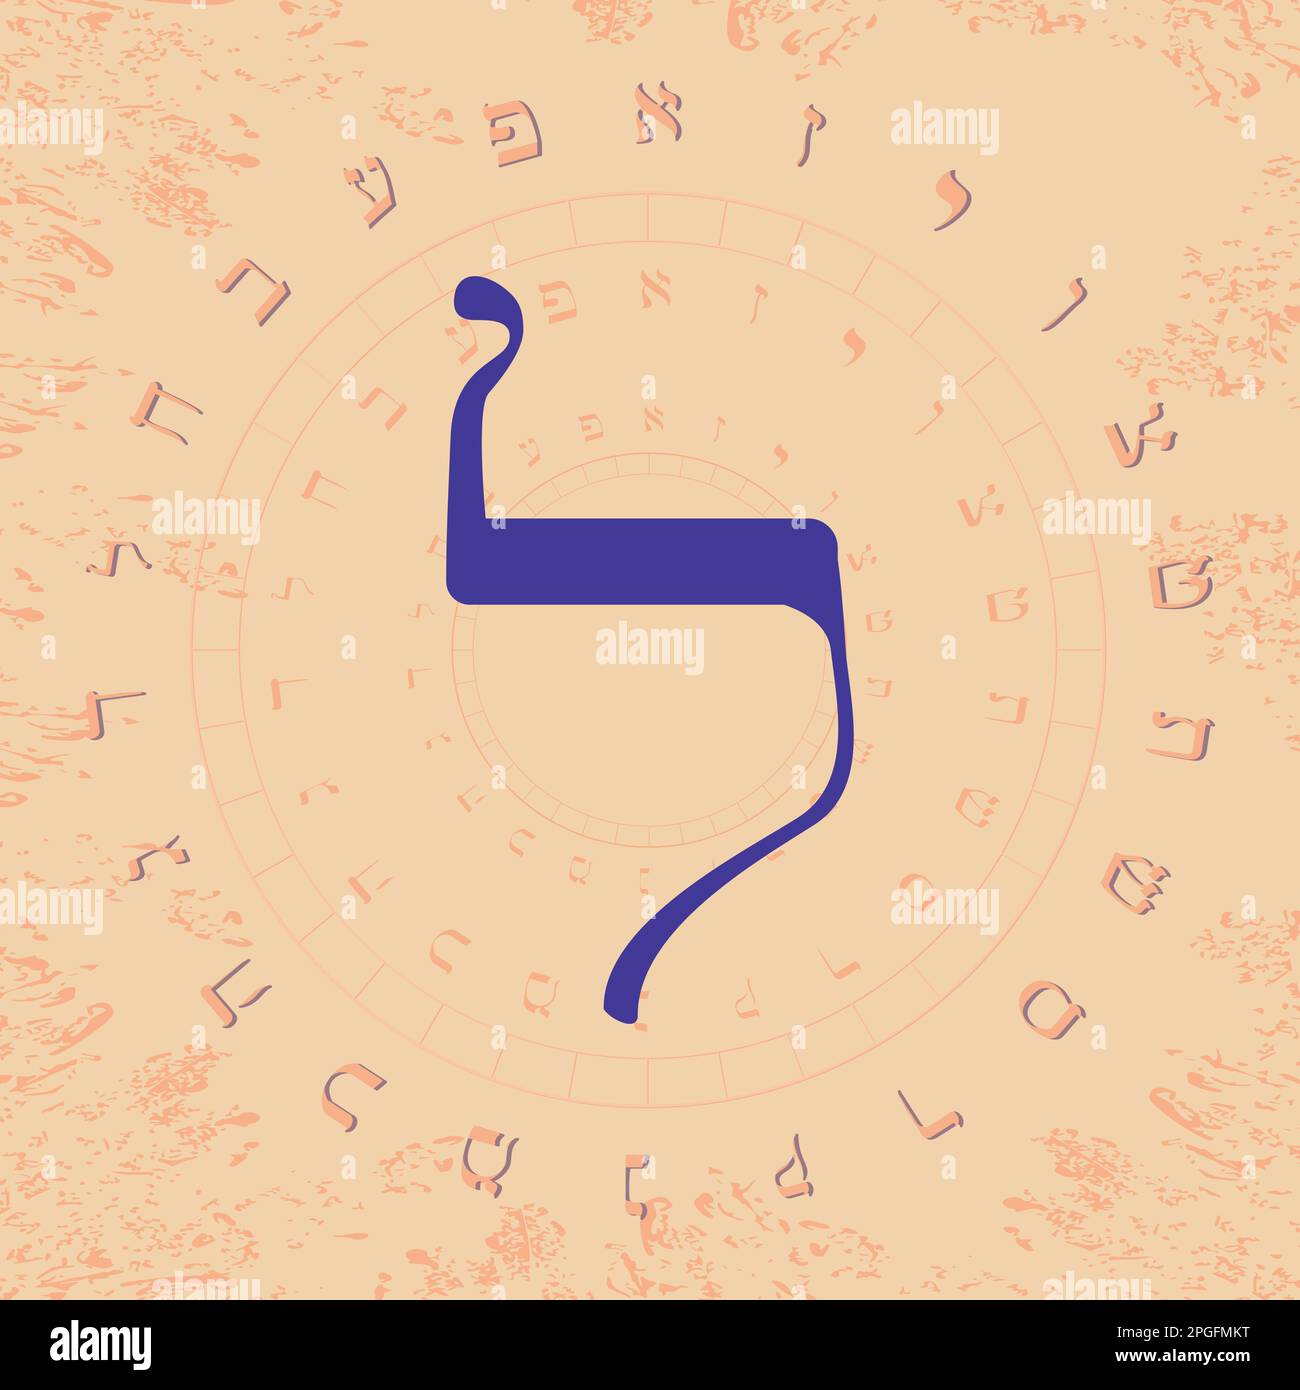 Vector illustration of the Hebrew alphabet in circular design. Large blue Hebrew letter called Lamed. Stock Vector